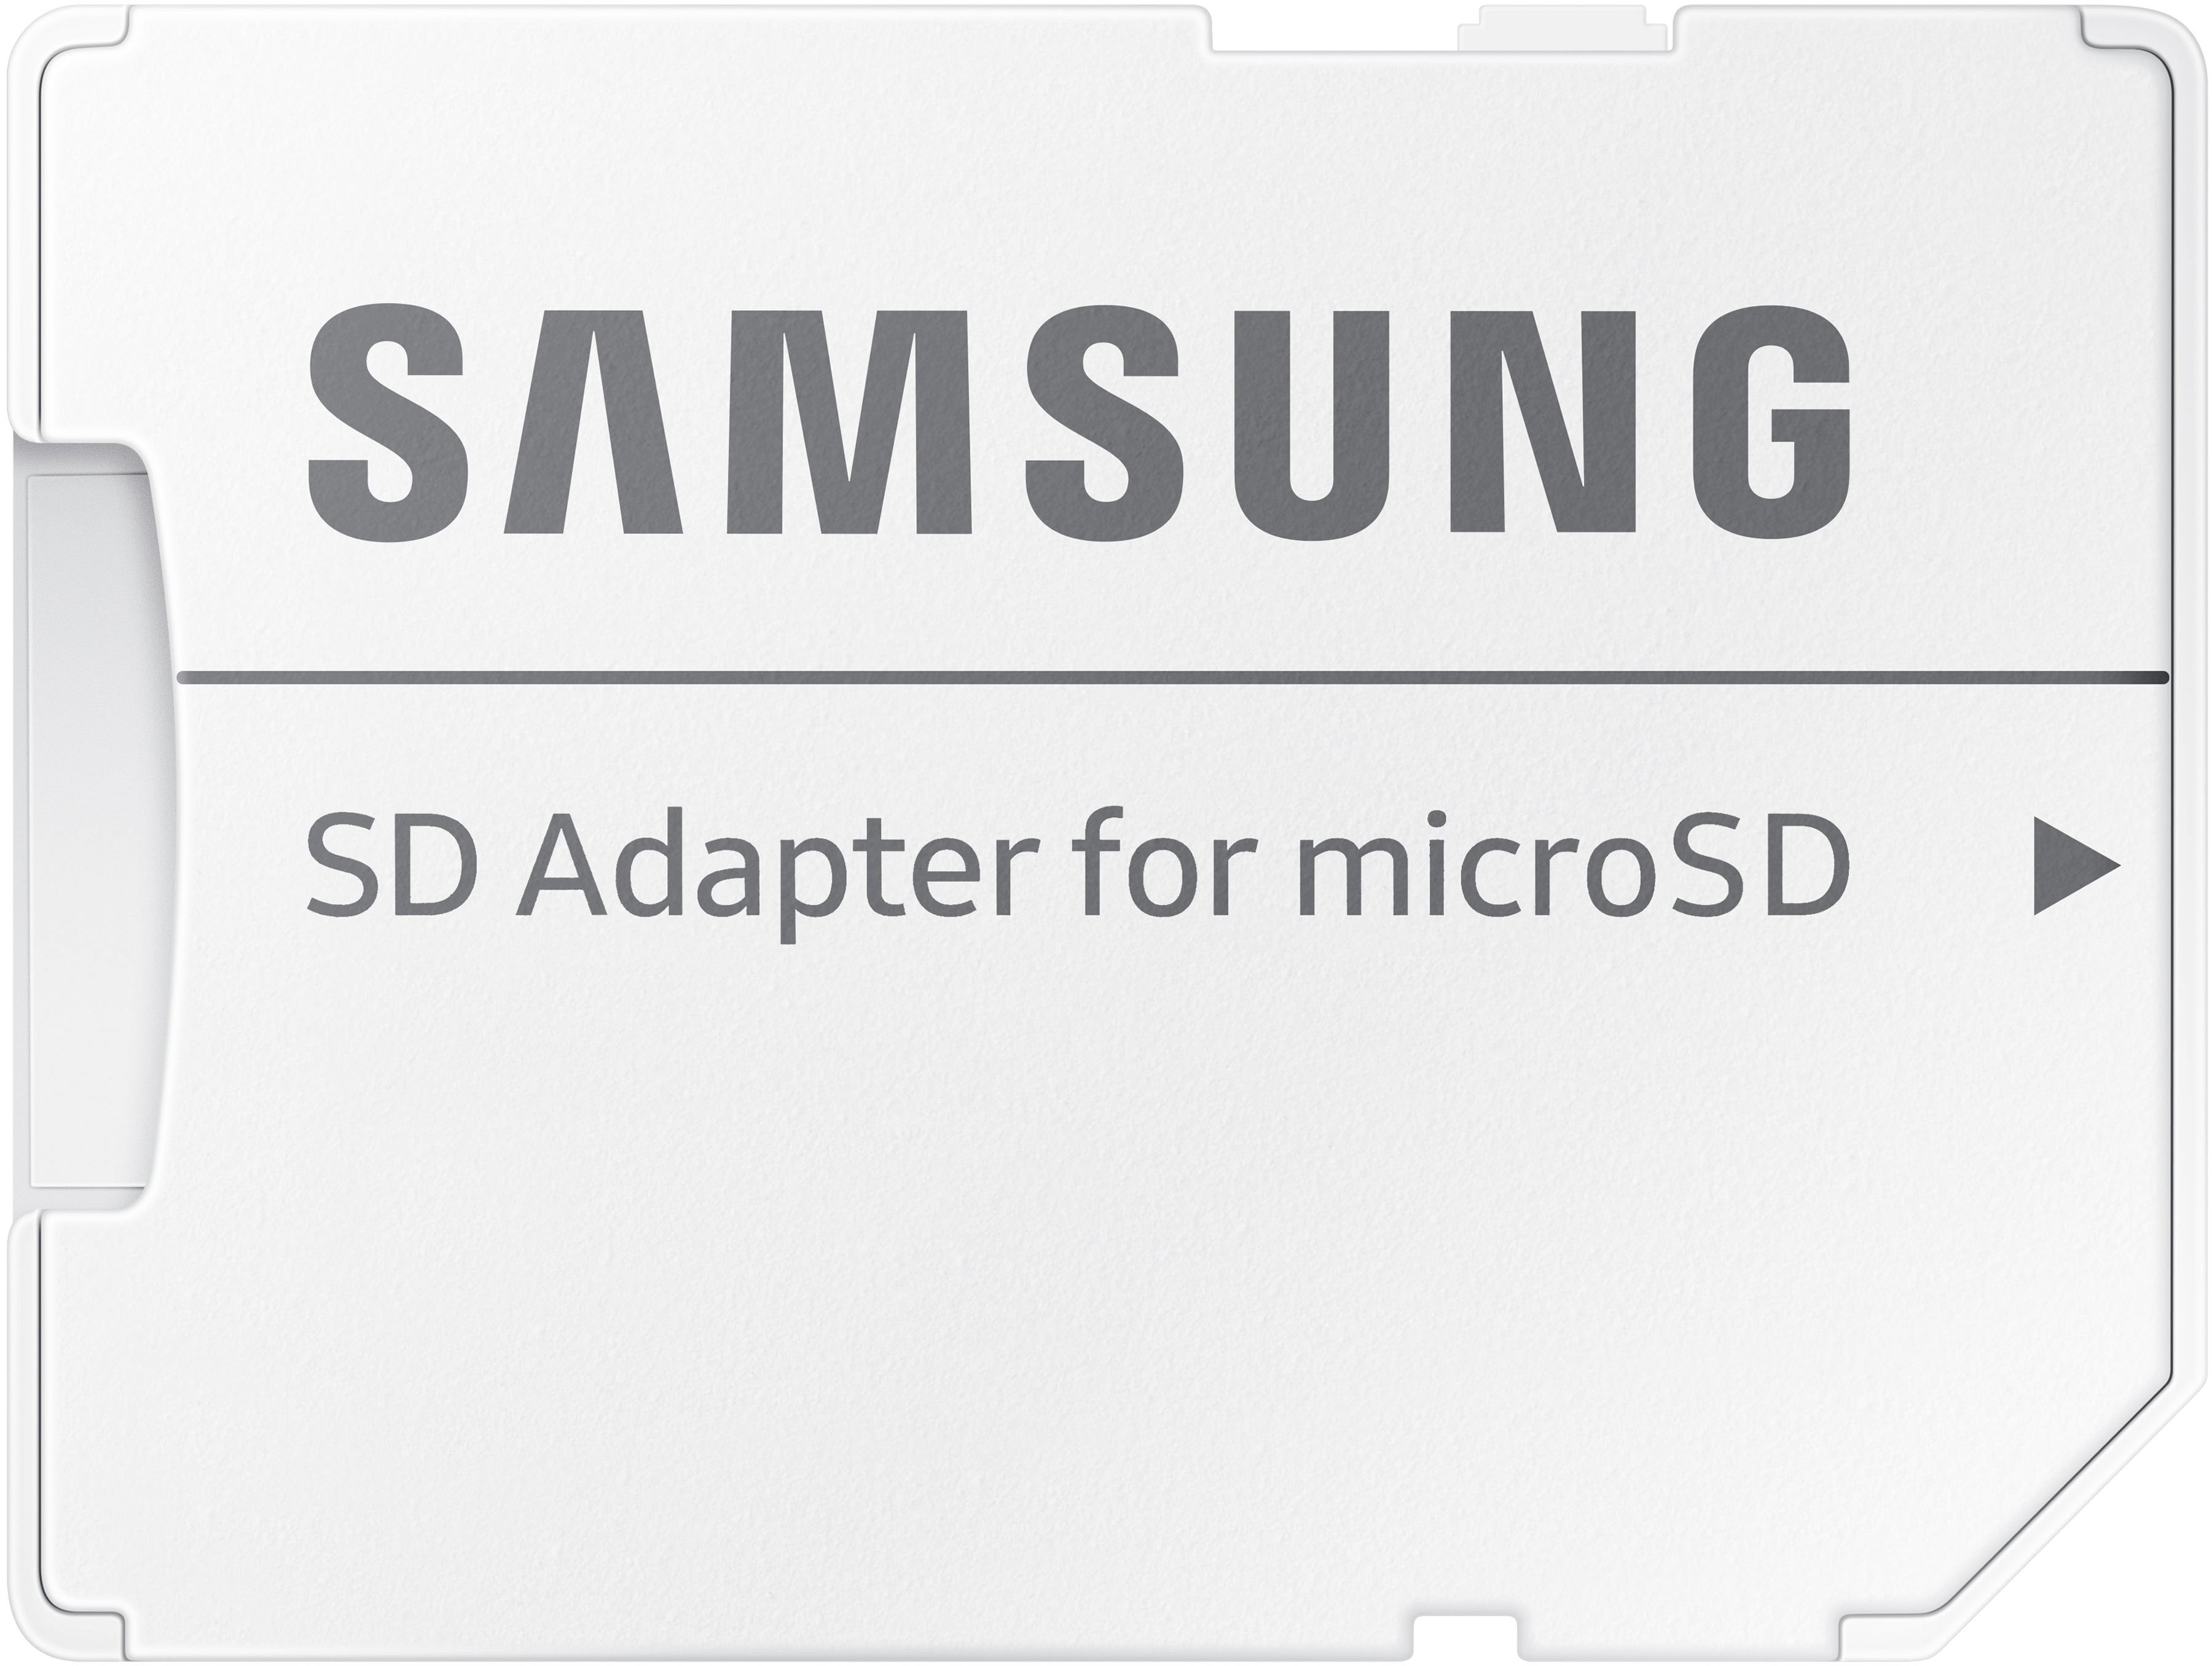 onn. 256 GB microSDXC U3 Memory Card with Adapter 